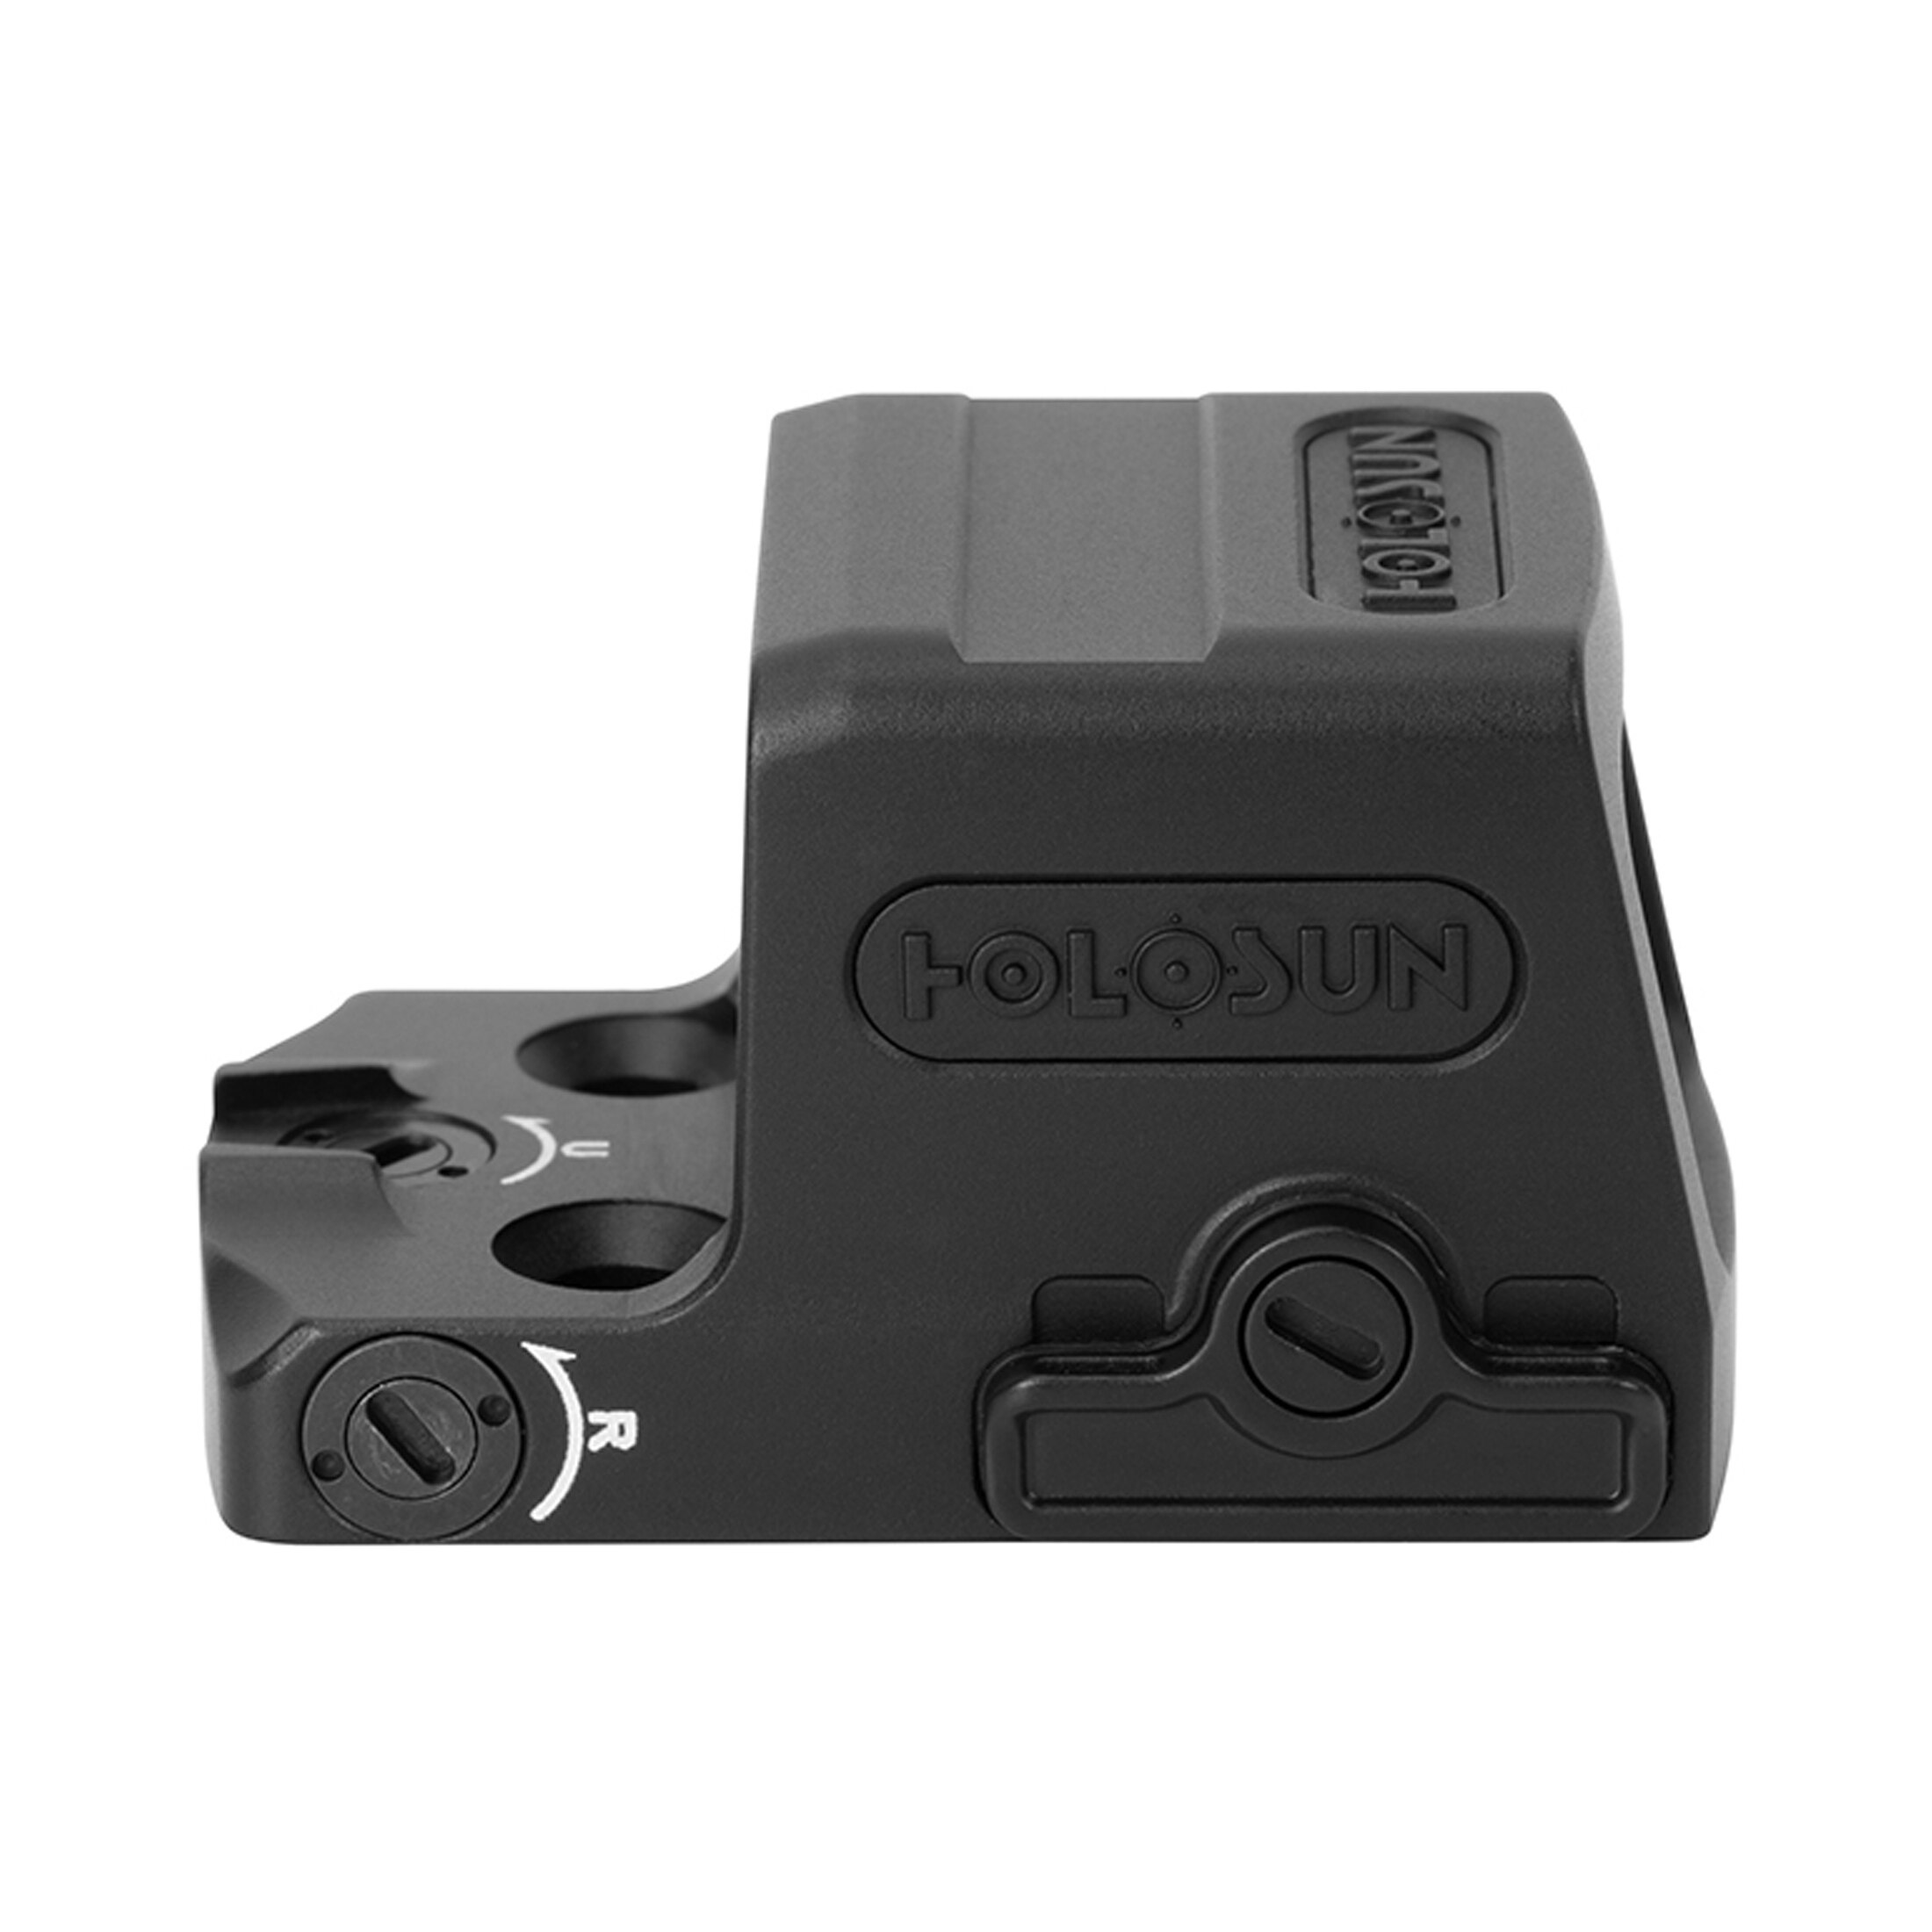 Holosun EPS closed reflex sight 2MOA green dot, aluminum, black, hunting, sport shooting, airsoft, …